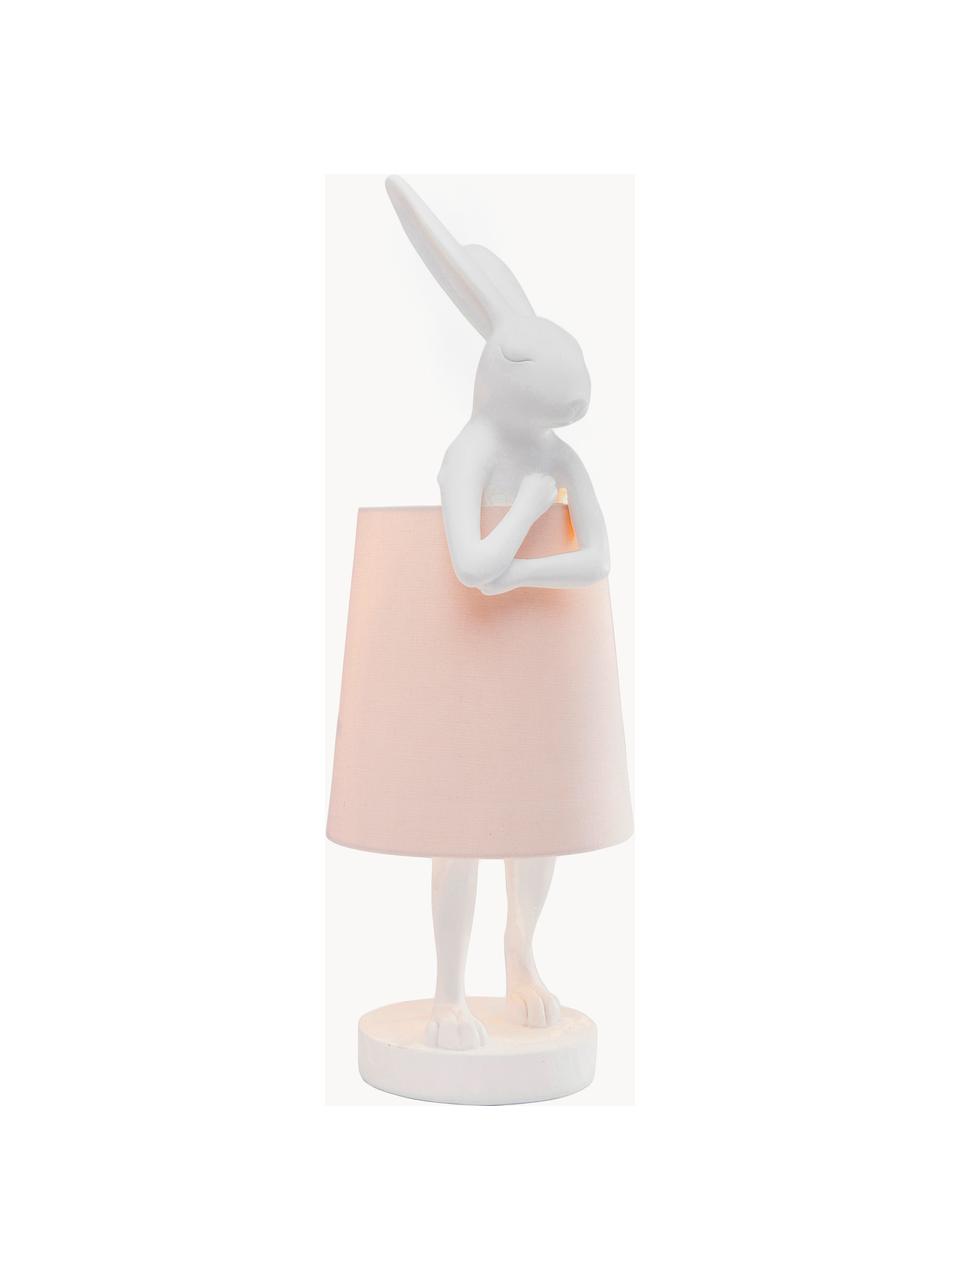 Grande lampe à poser design Rabbit, Blanc, rose pâle, Ø 23 x haut. 68 cm